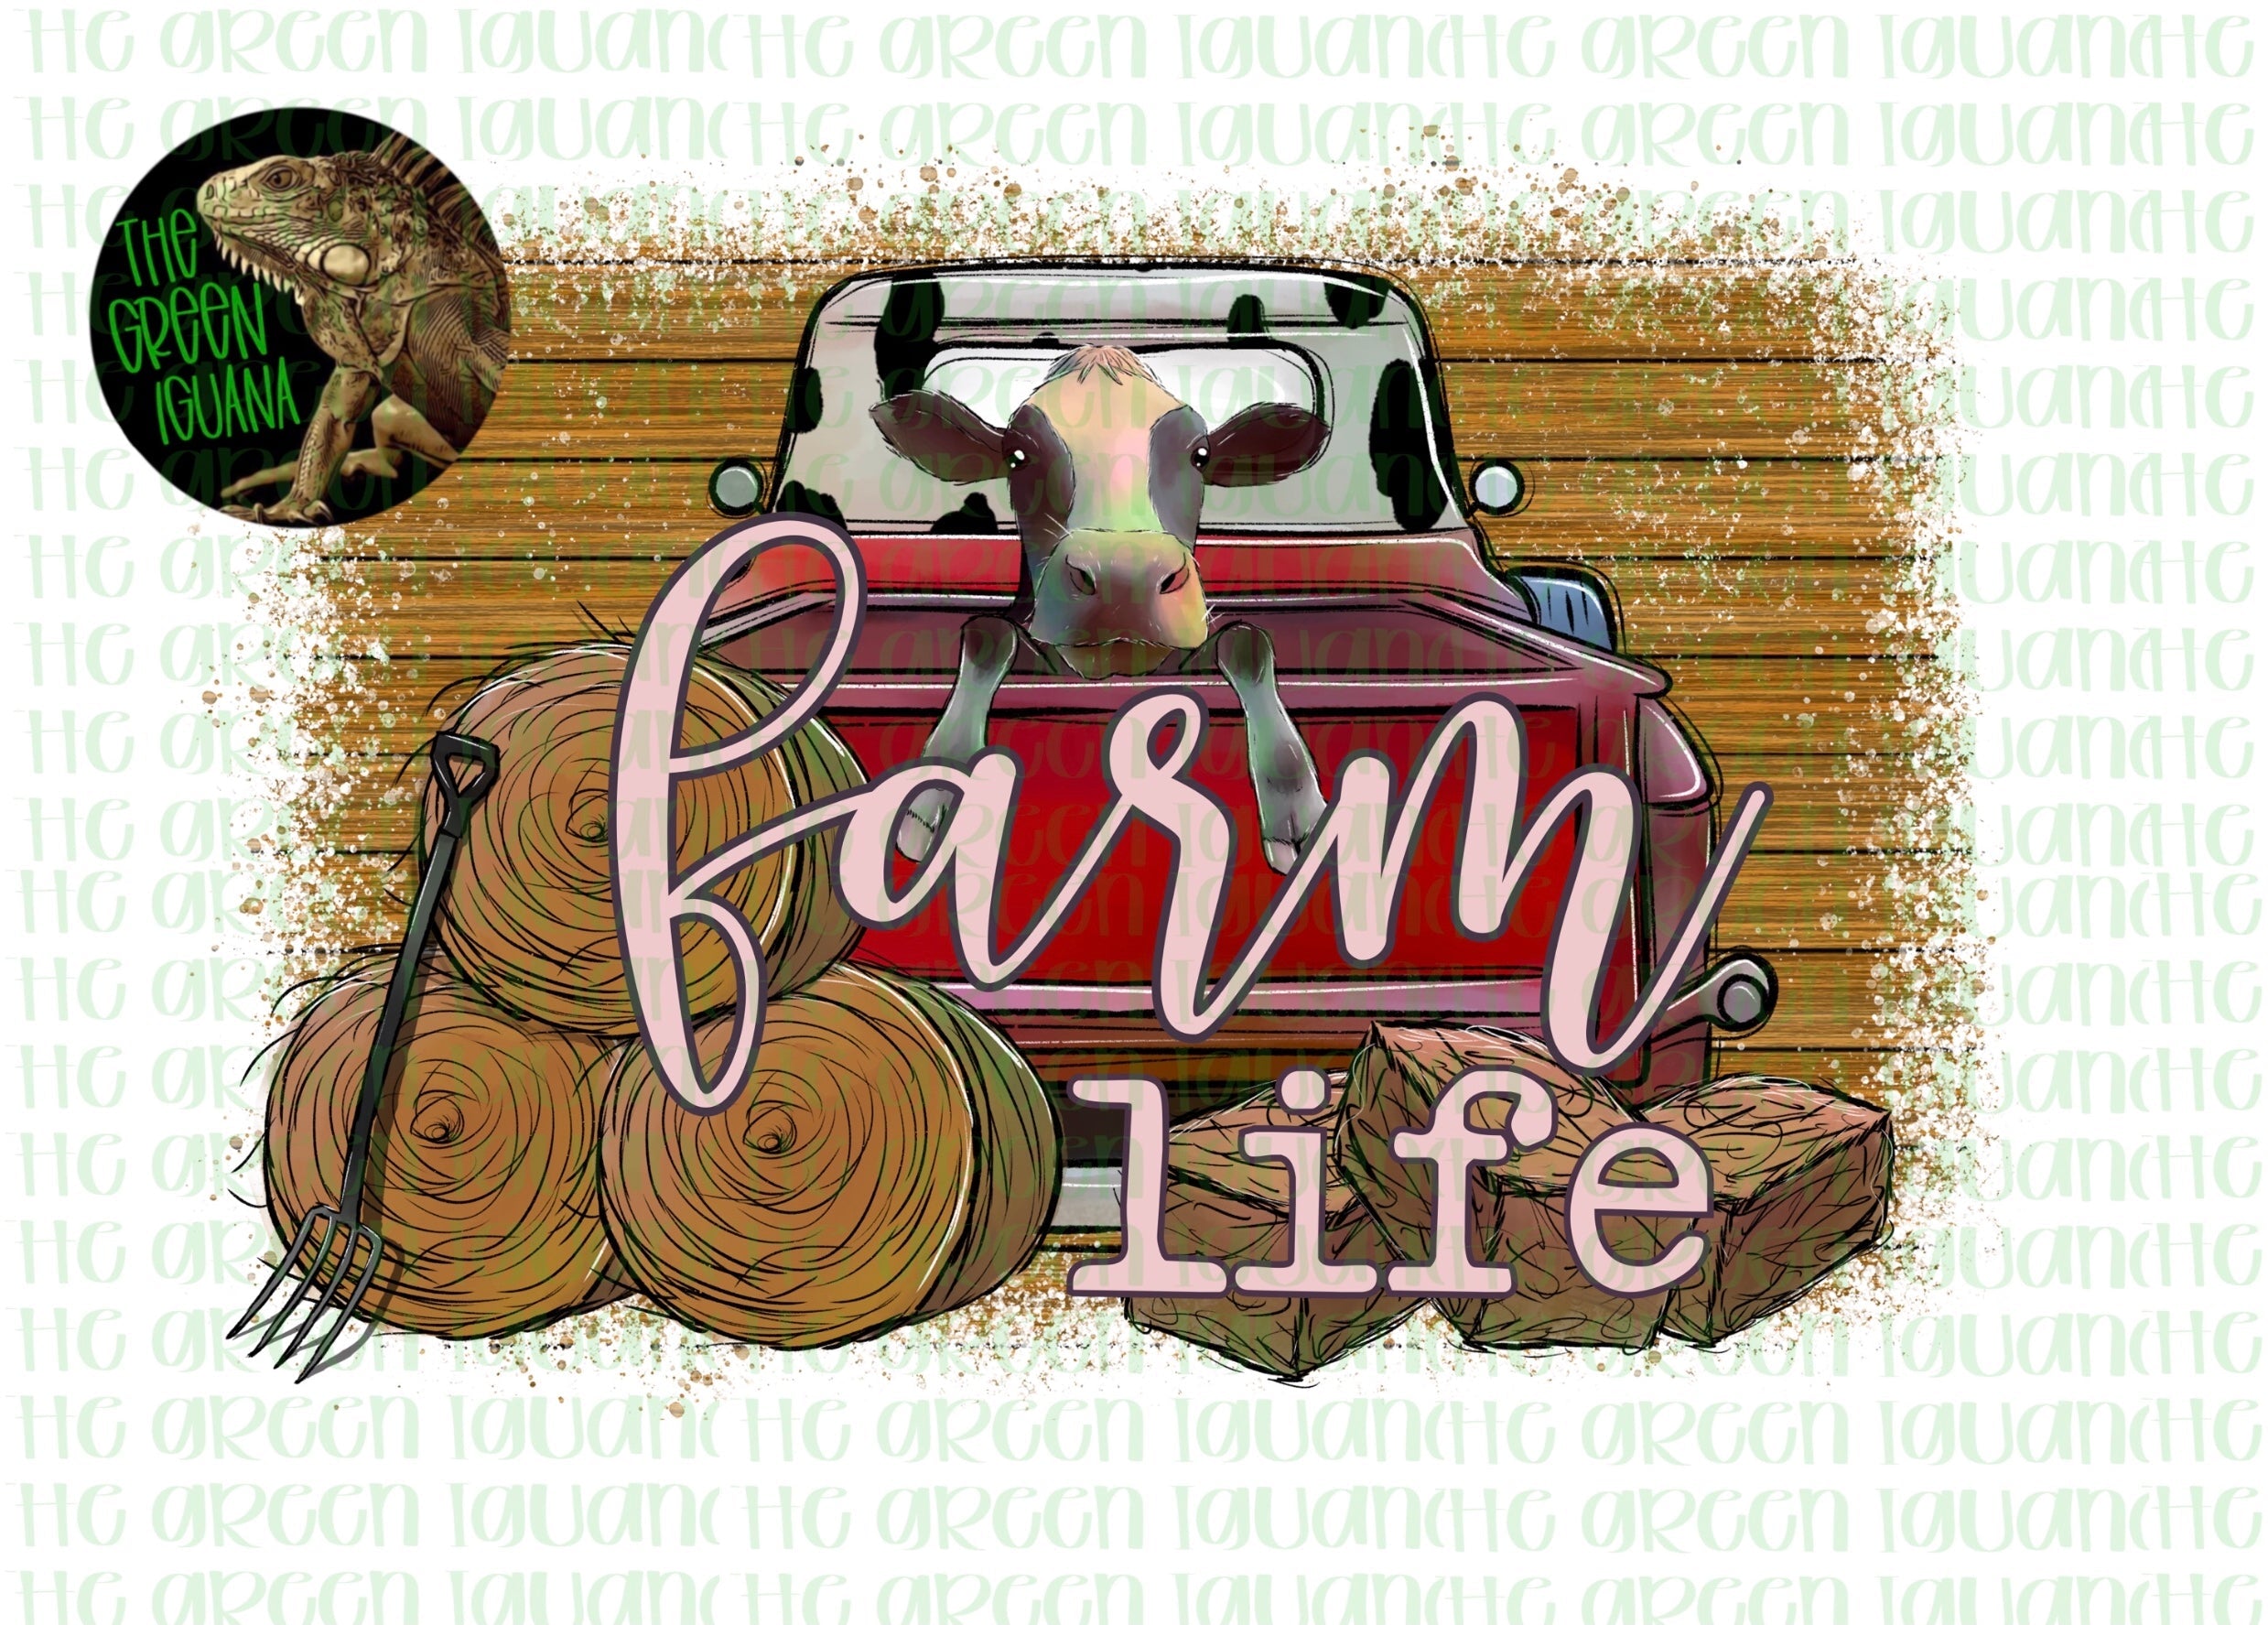 Farm life